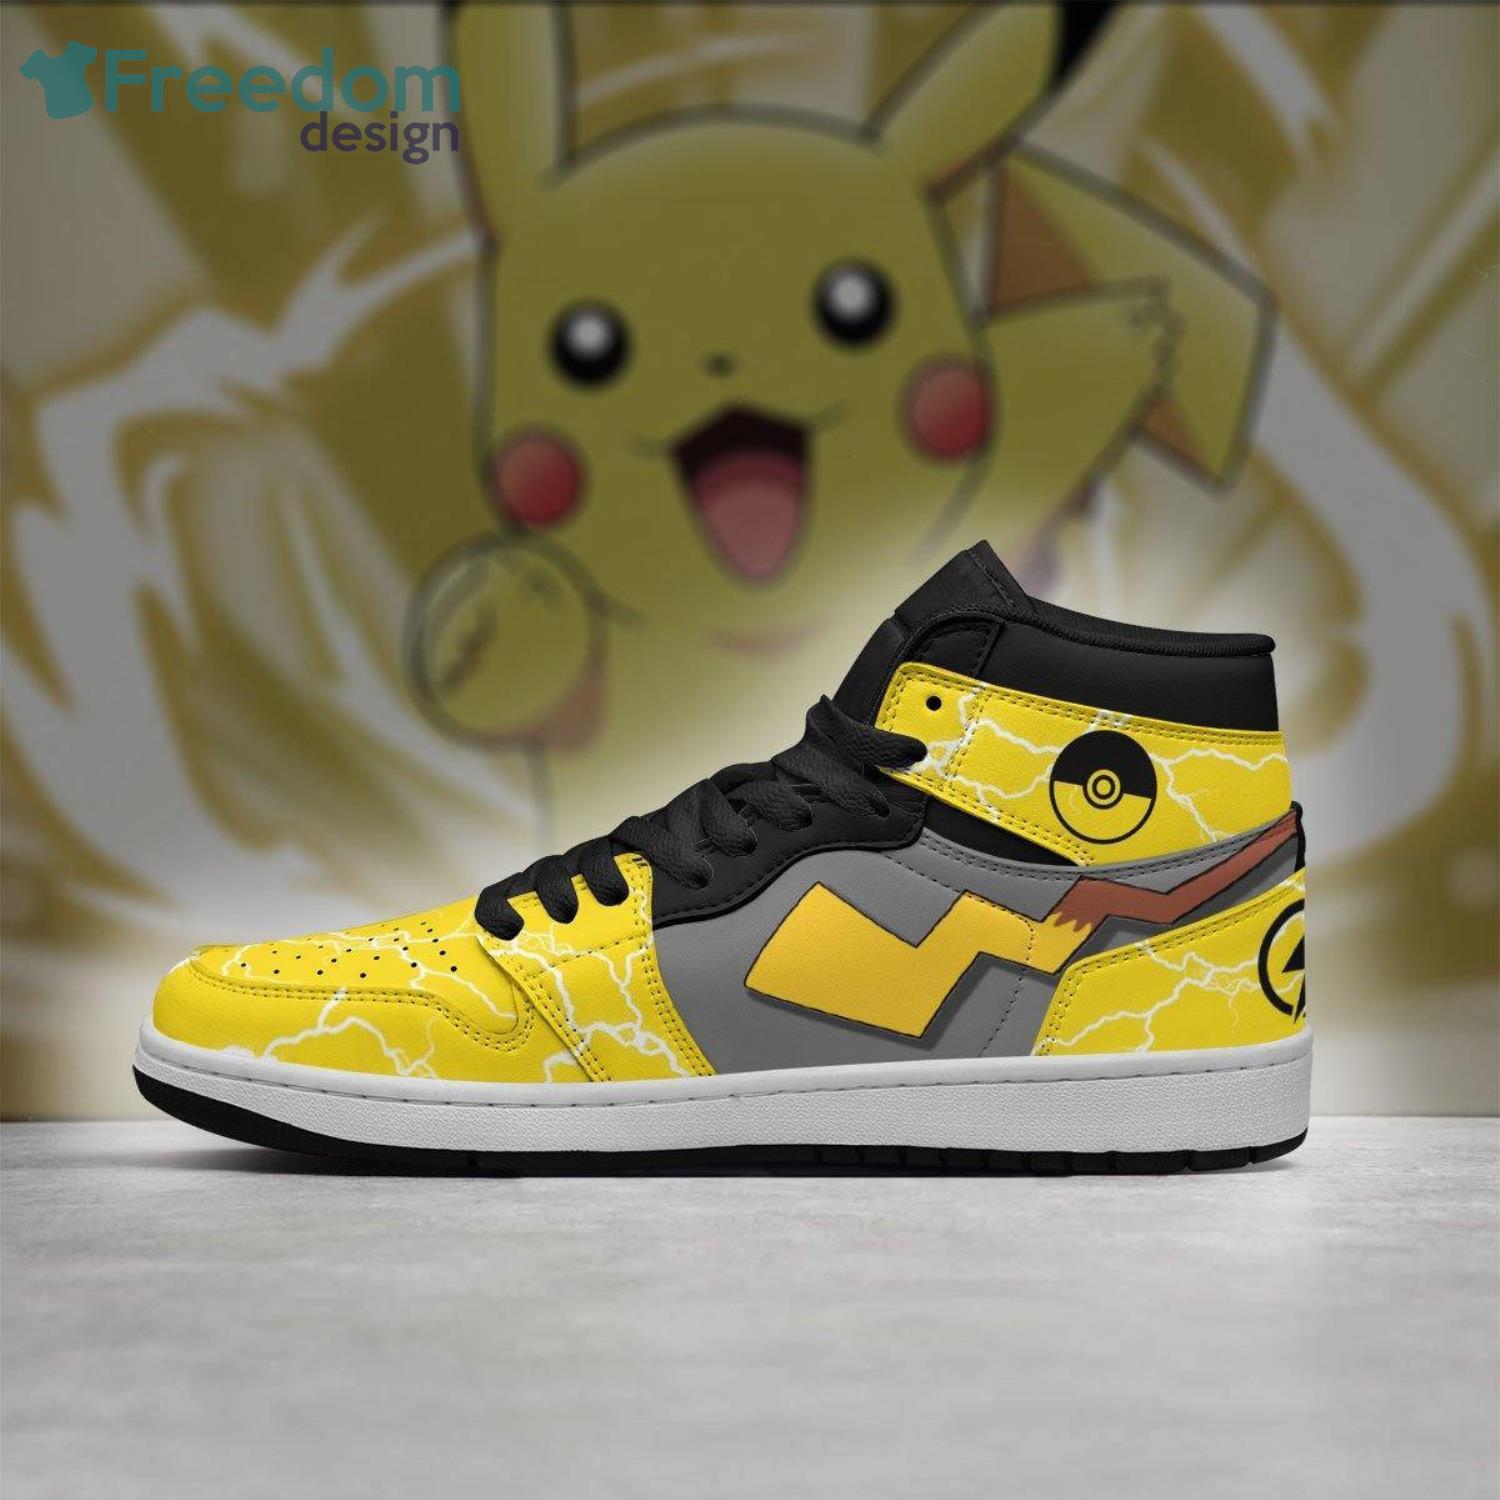 Pikachu Pokemon Anime Air Jordan Hightop Shoes